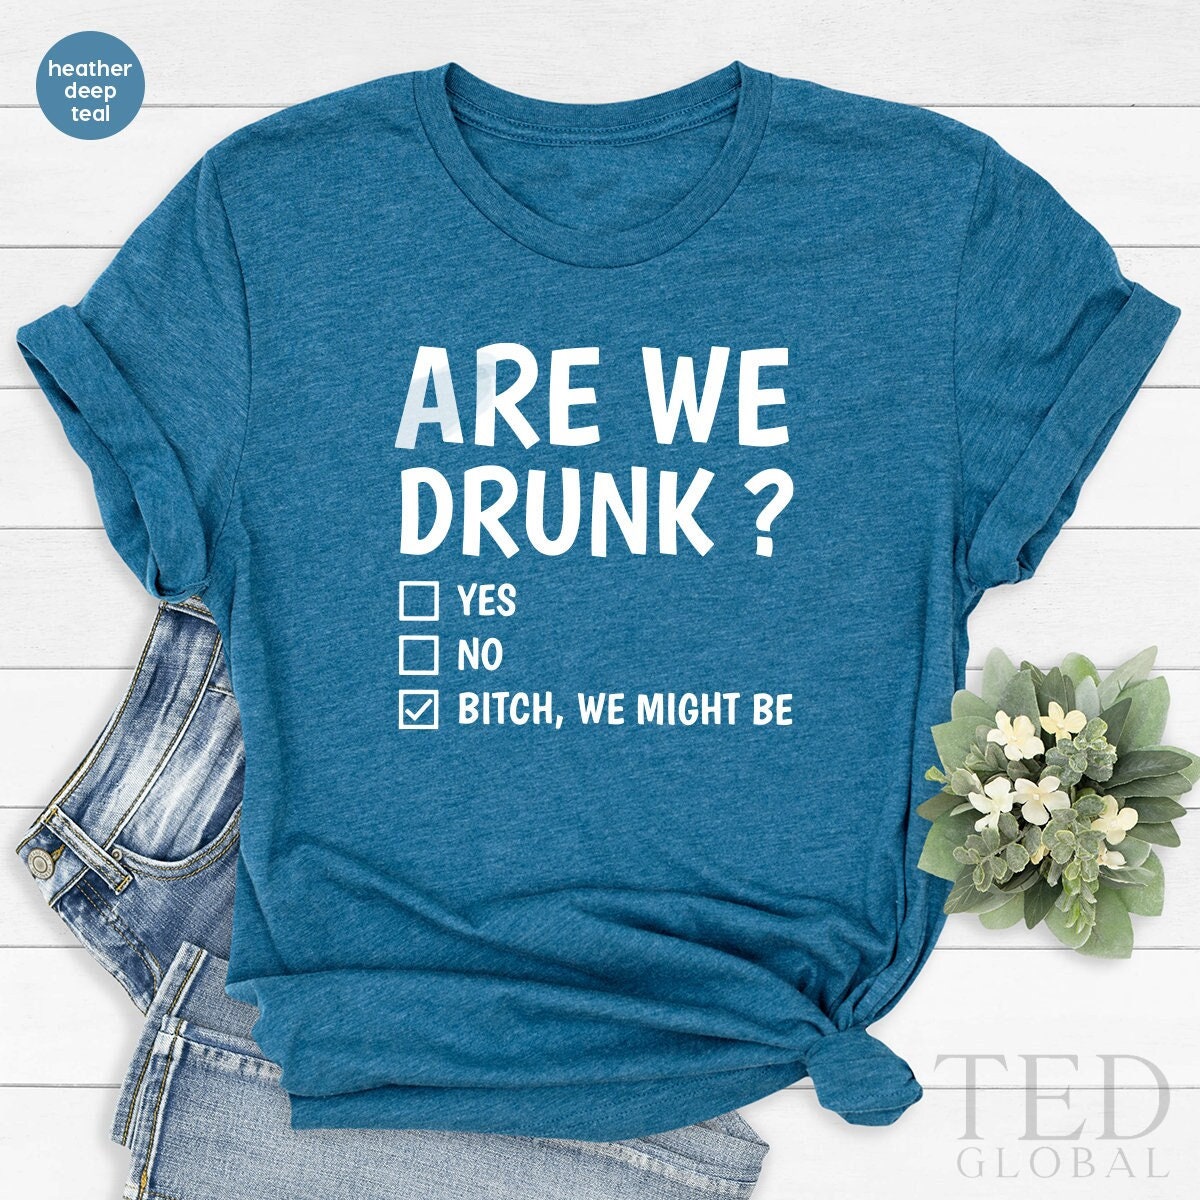 Funny Drunk Shirt, Drinking Party Shirt, We Drunk Shirt, Besties